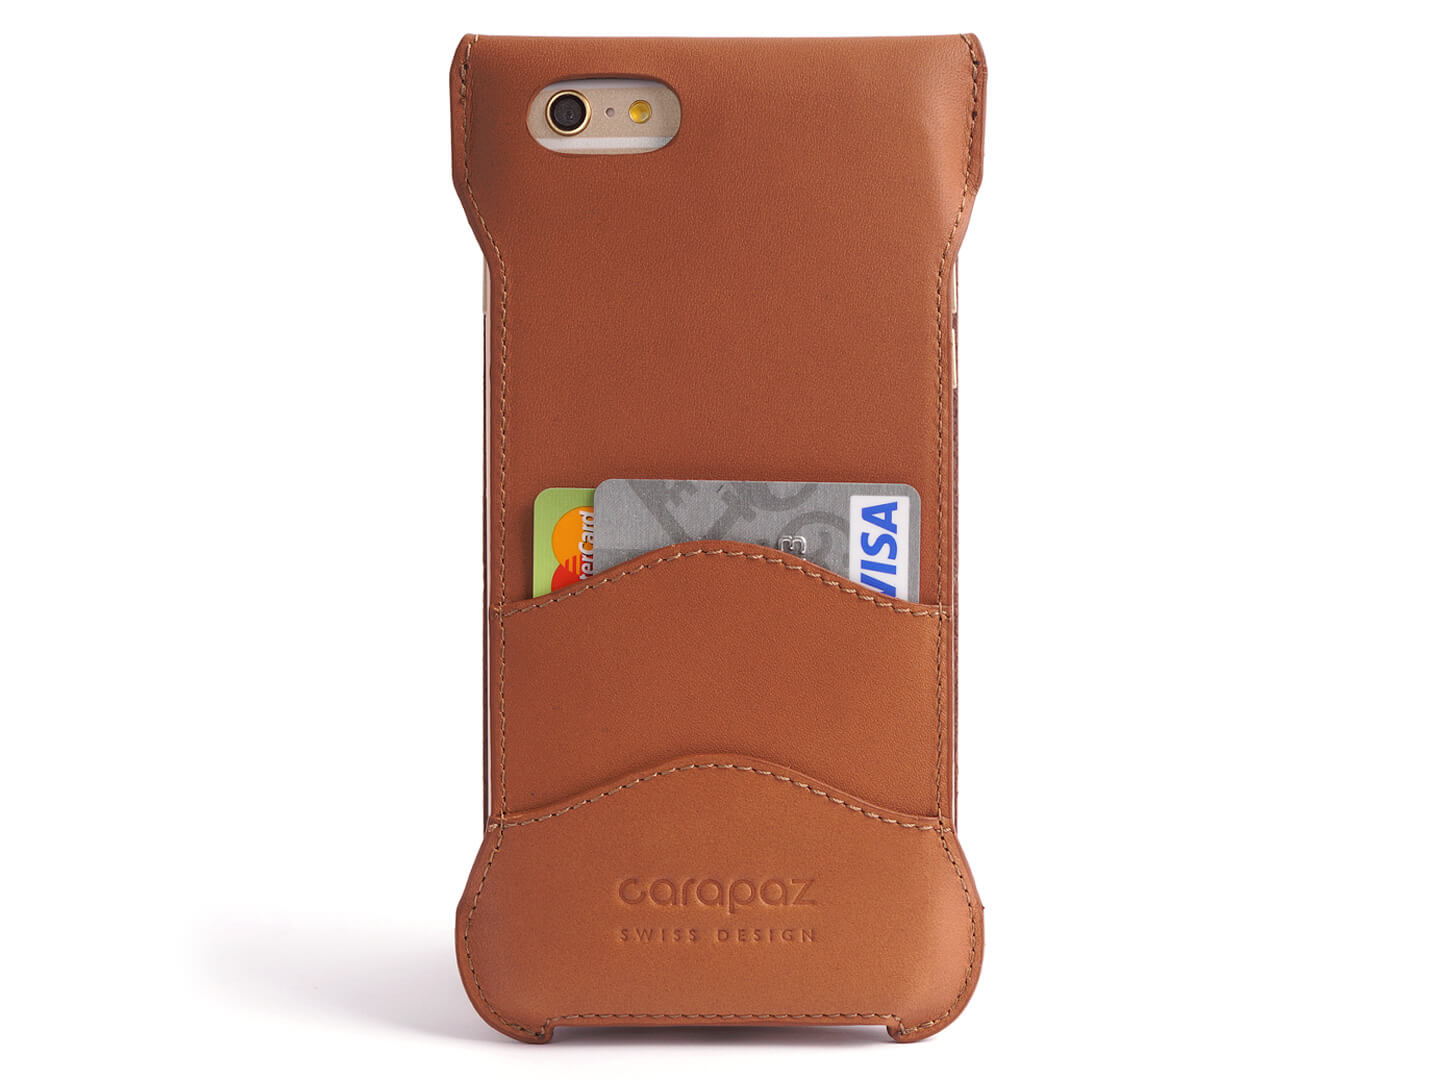 iPhone 6 Plus Flip Case - Vegtan Leather - Stand Function - Card Slot - rear - tan - Carapaz